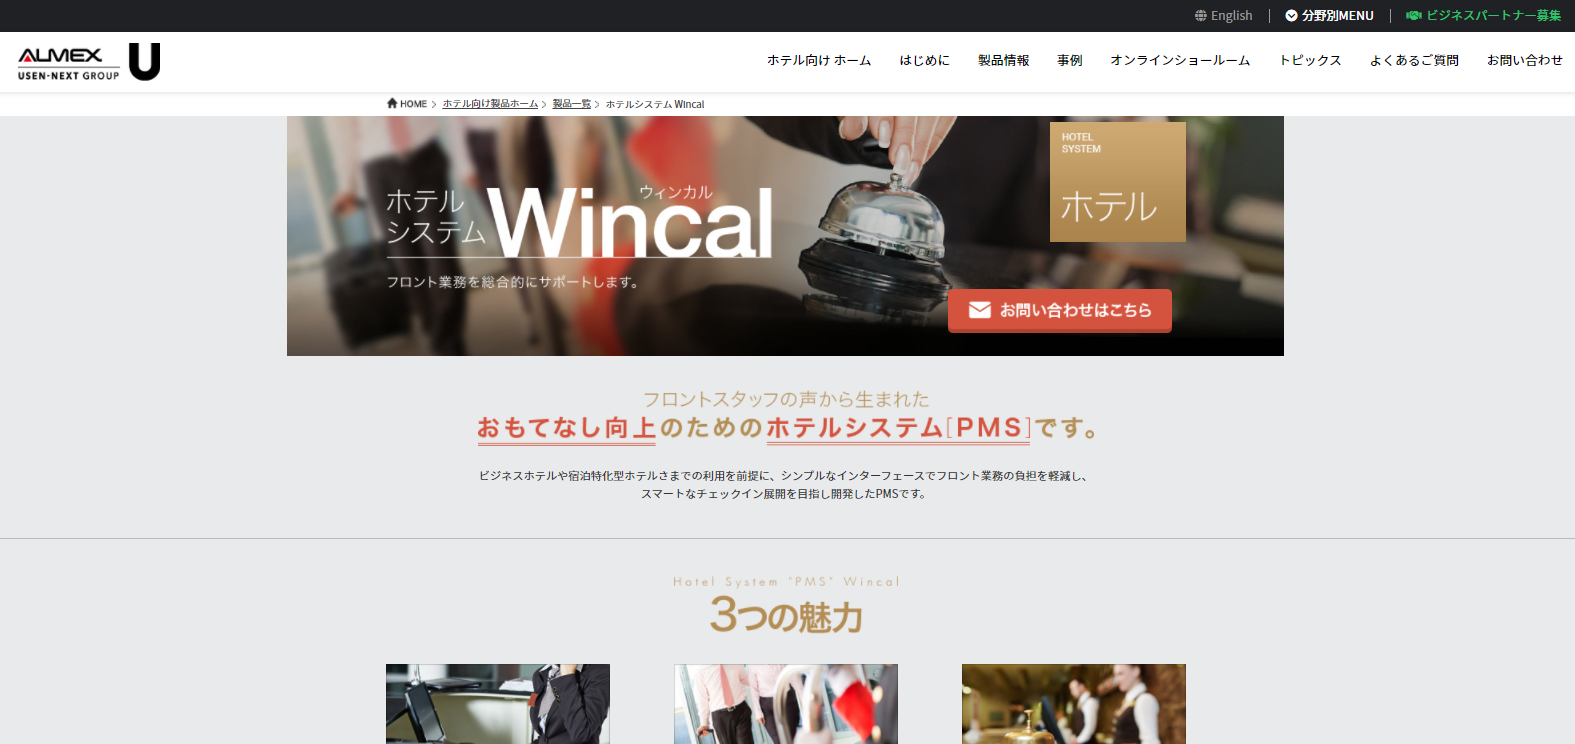 Wincal」について知る, 日本最大級のホテル旅館情報サイト HOTELIER